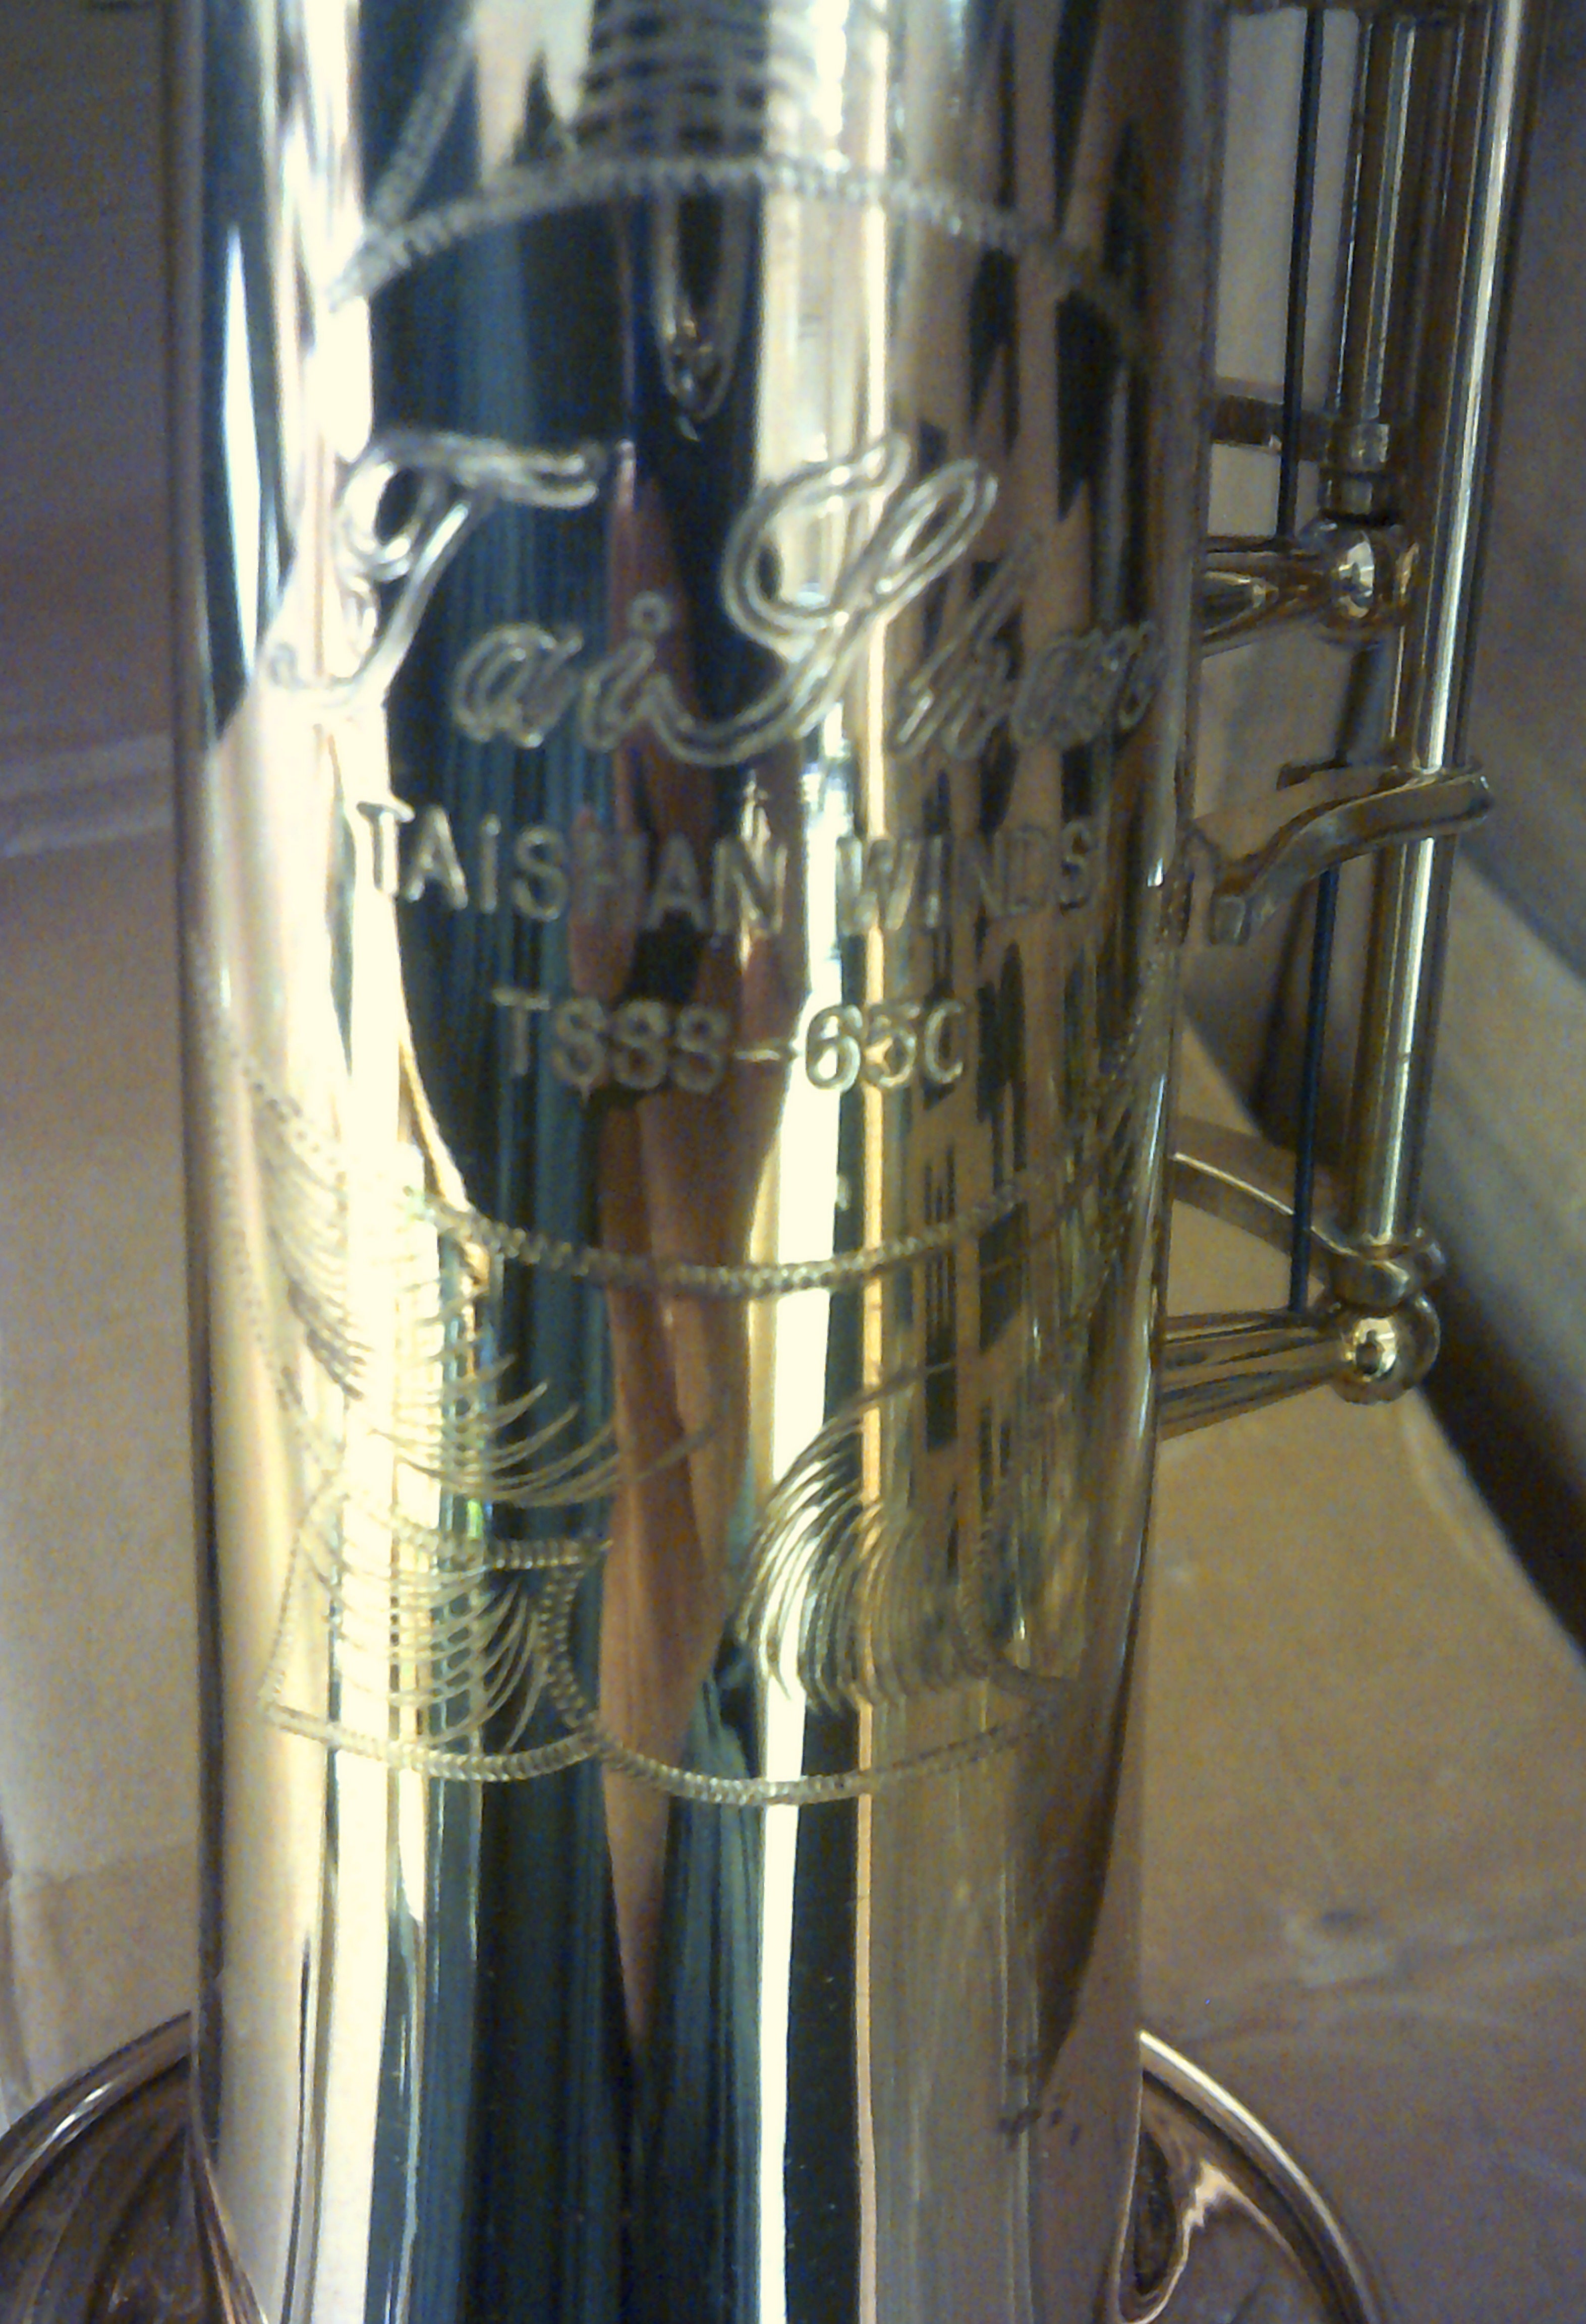 Taishan Winds Soprano Saxophone TSSS-65C